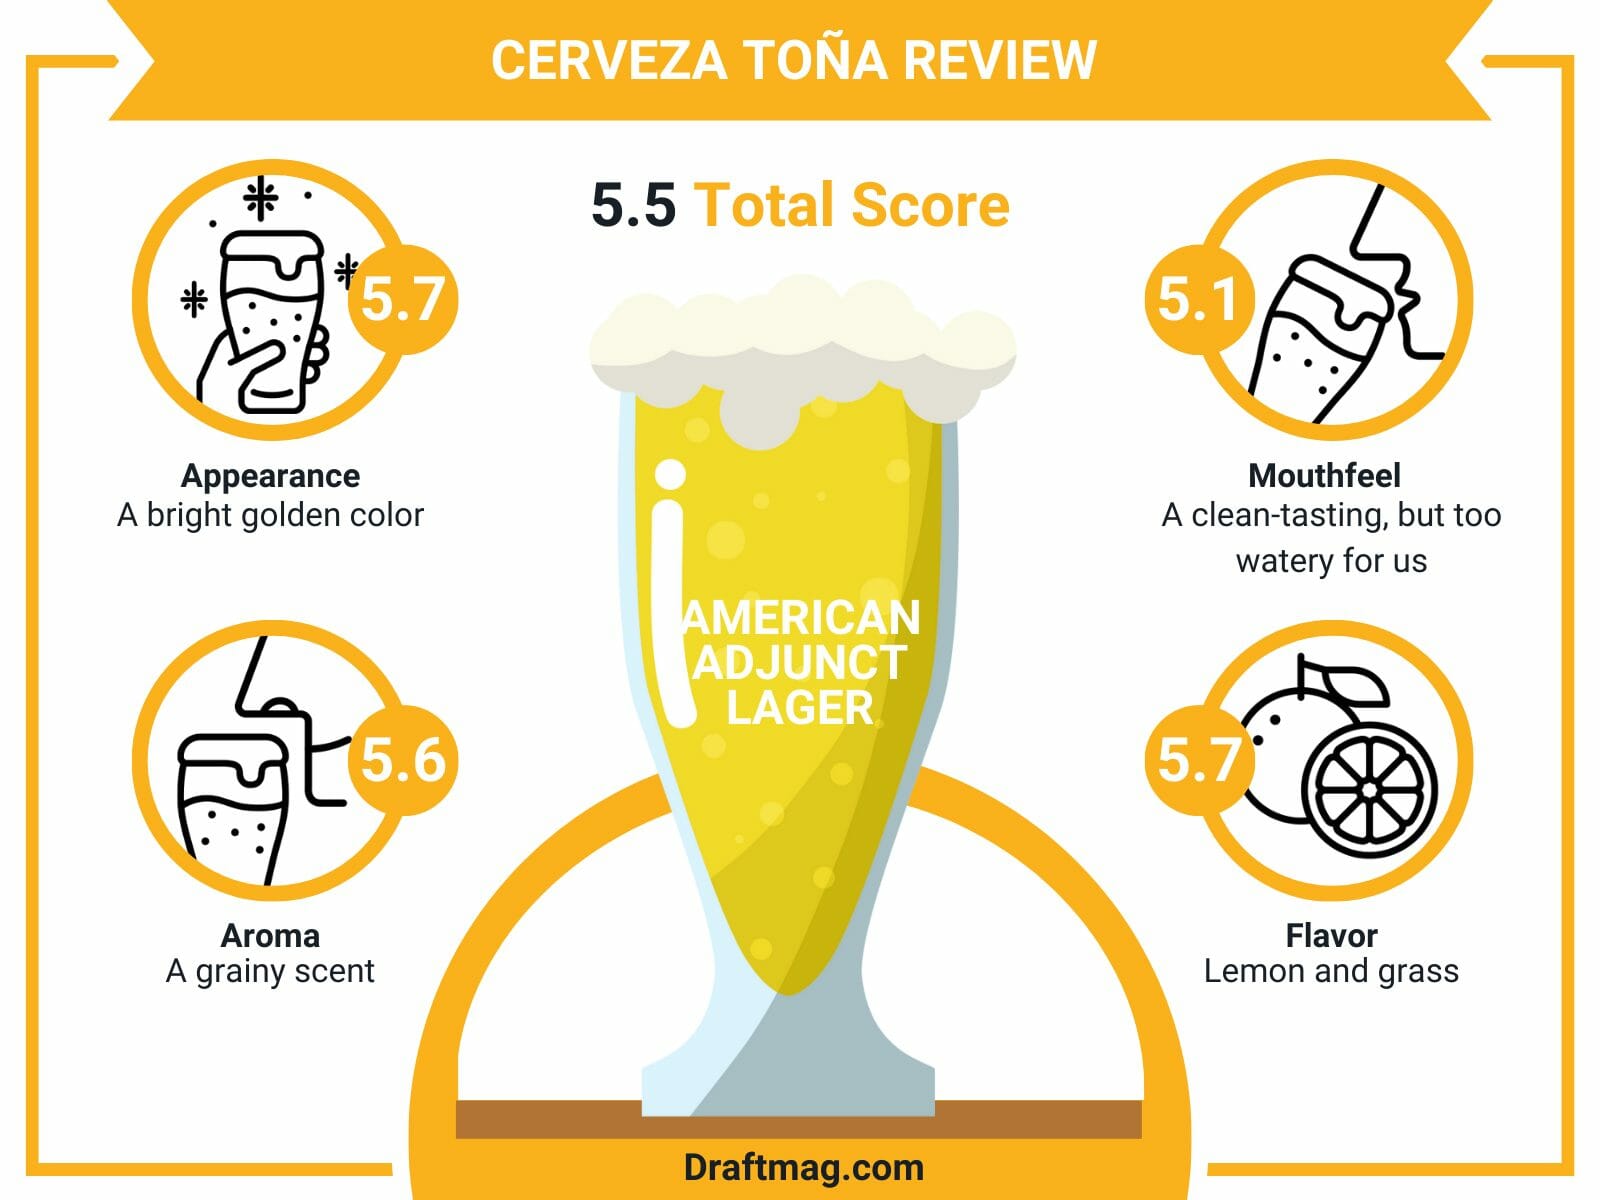 Cerveza tona review infographic